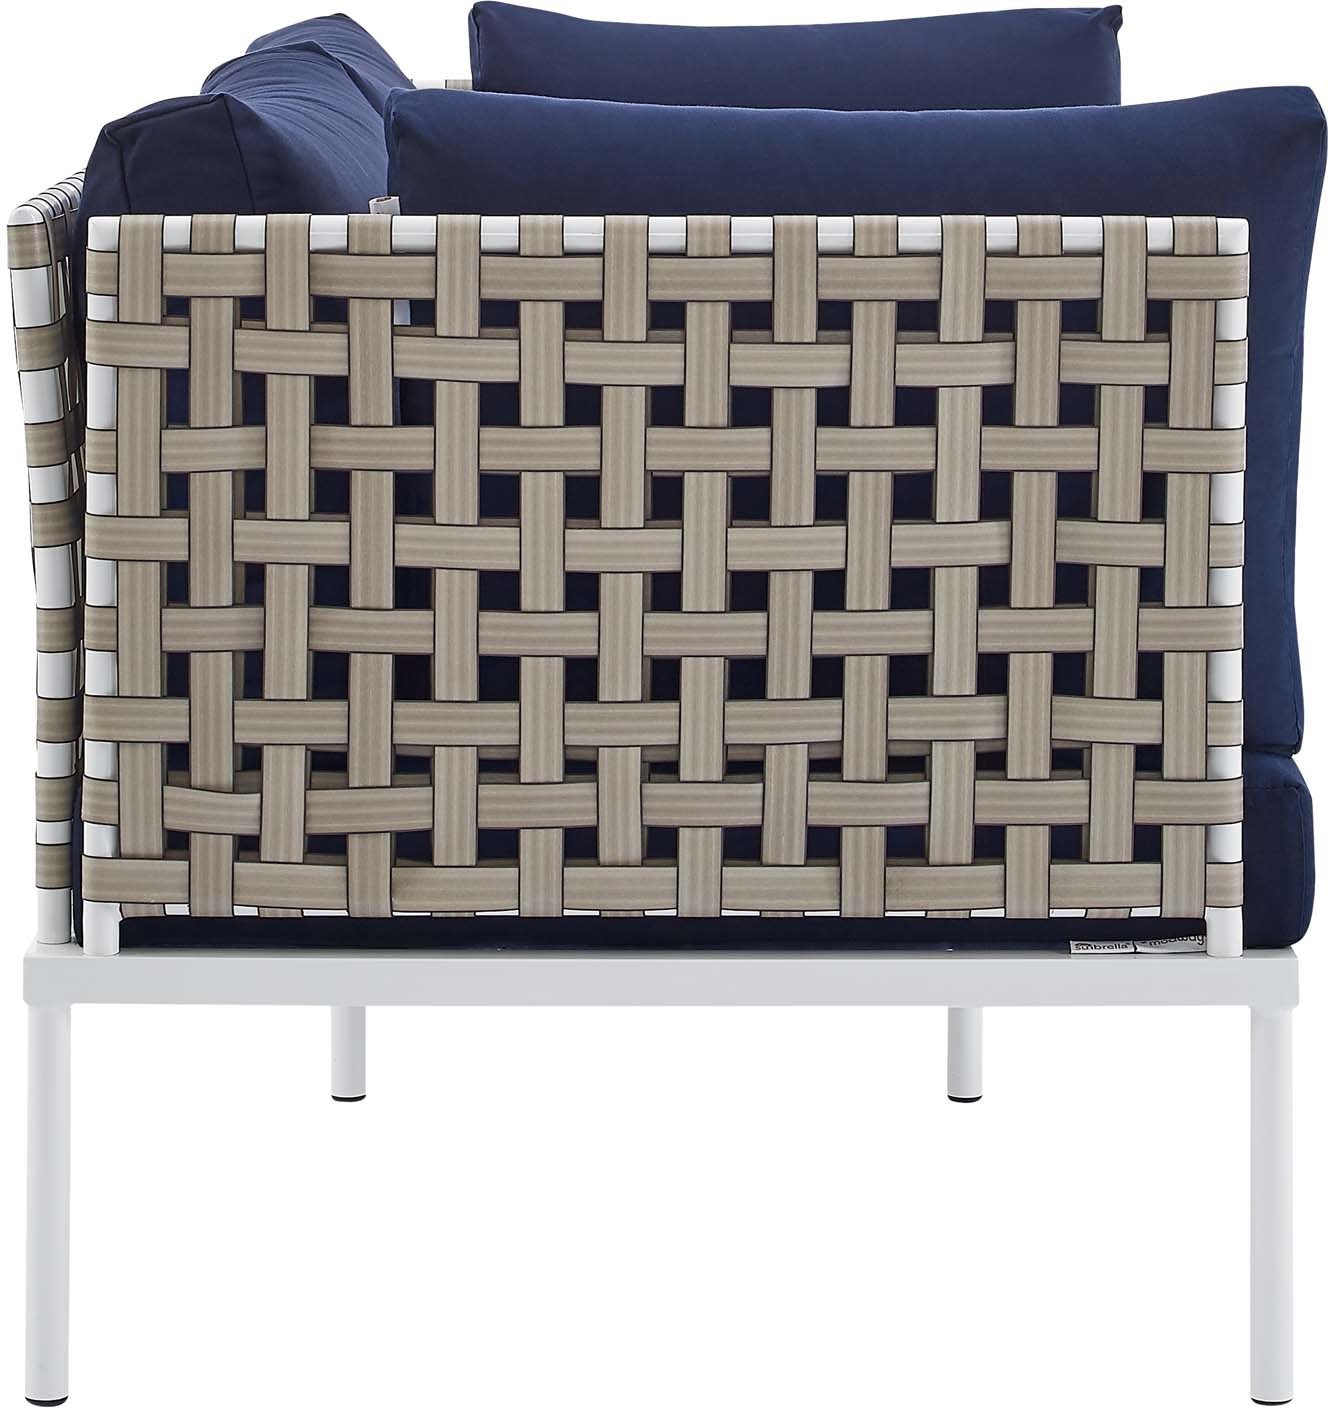 fabric loveseat sofa Modway Furniture Sofa Sectionals Tan Navy